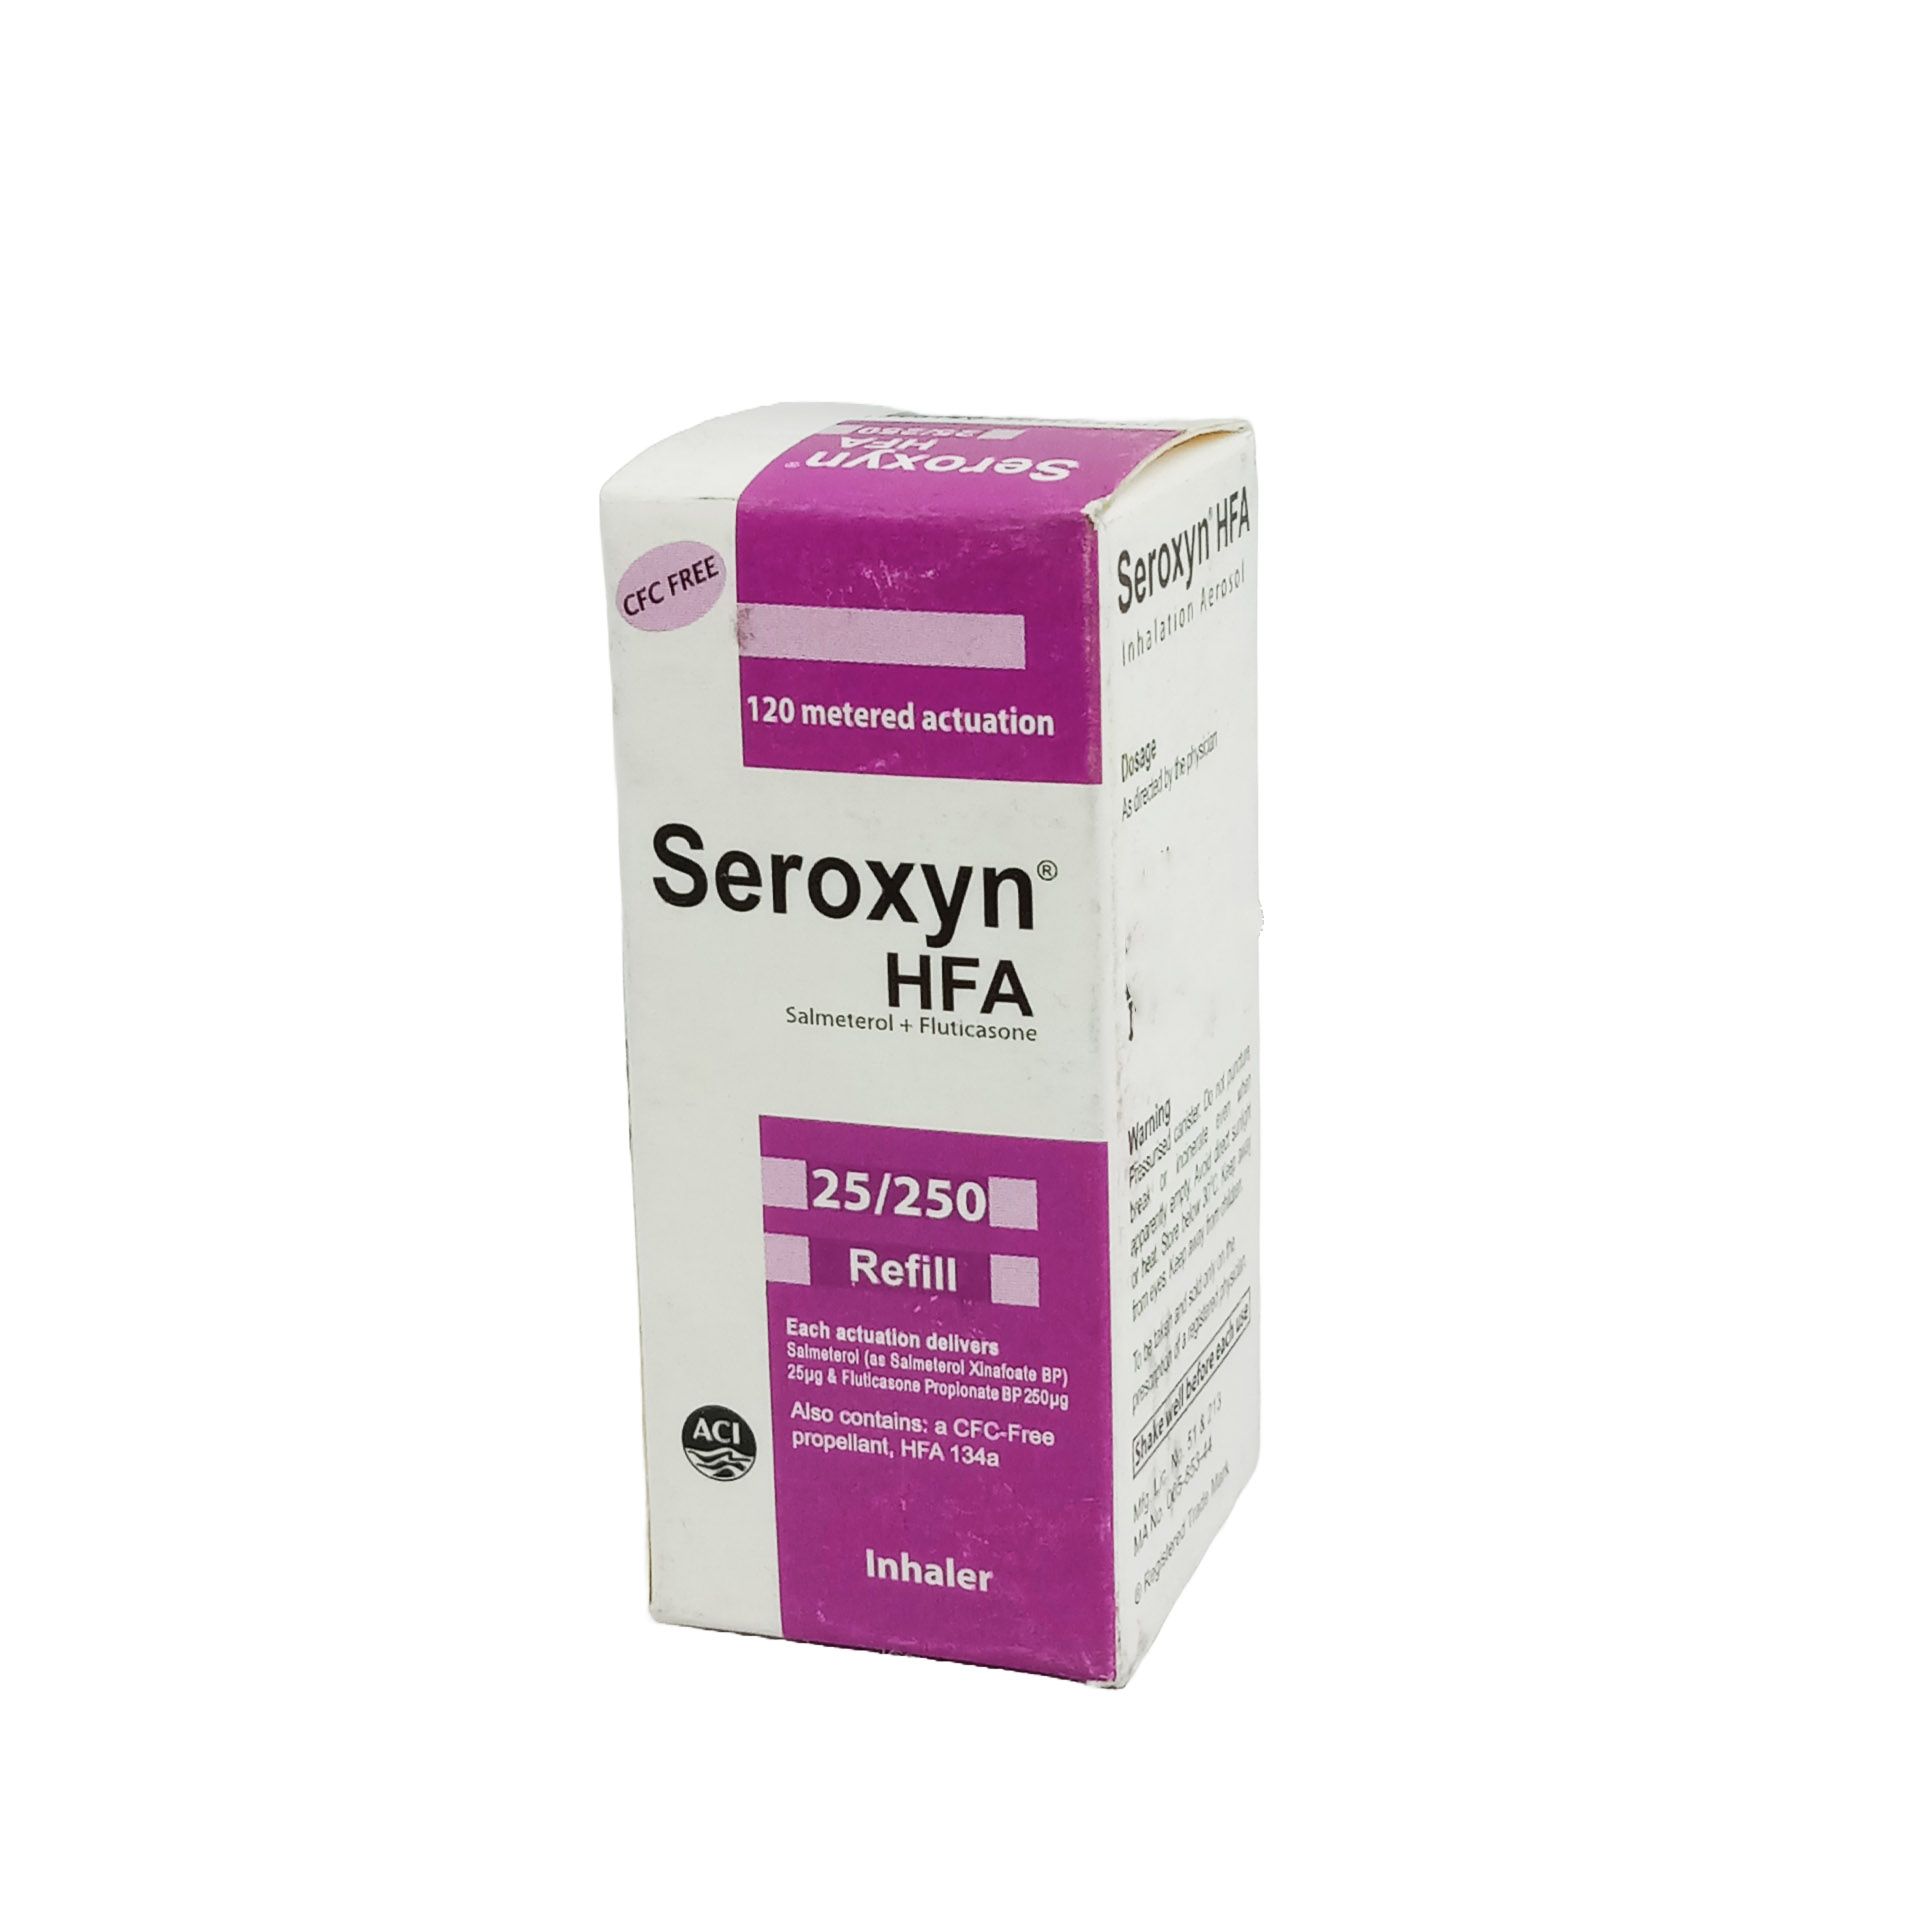 Seroxyn HFA 25/250 Refill 25mcg+250mcg/puff Inhaler